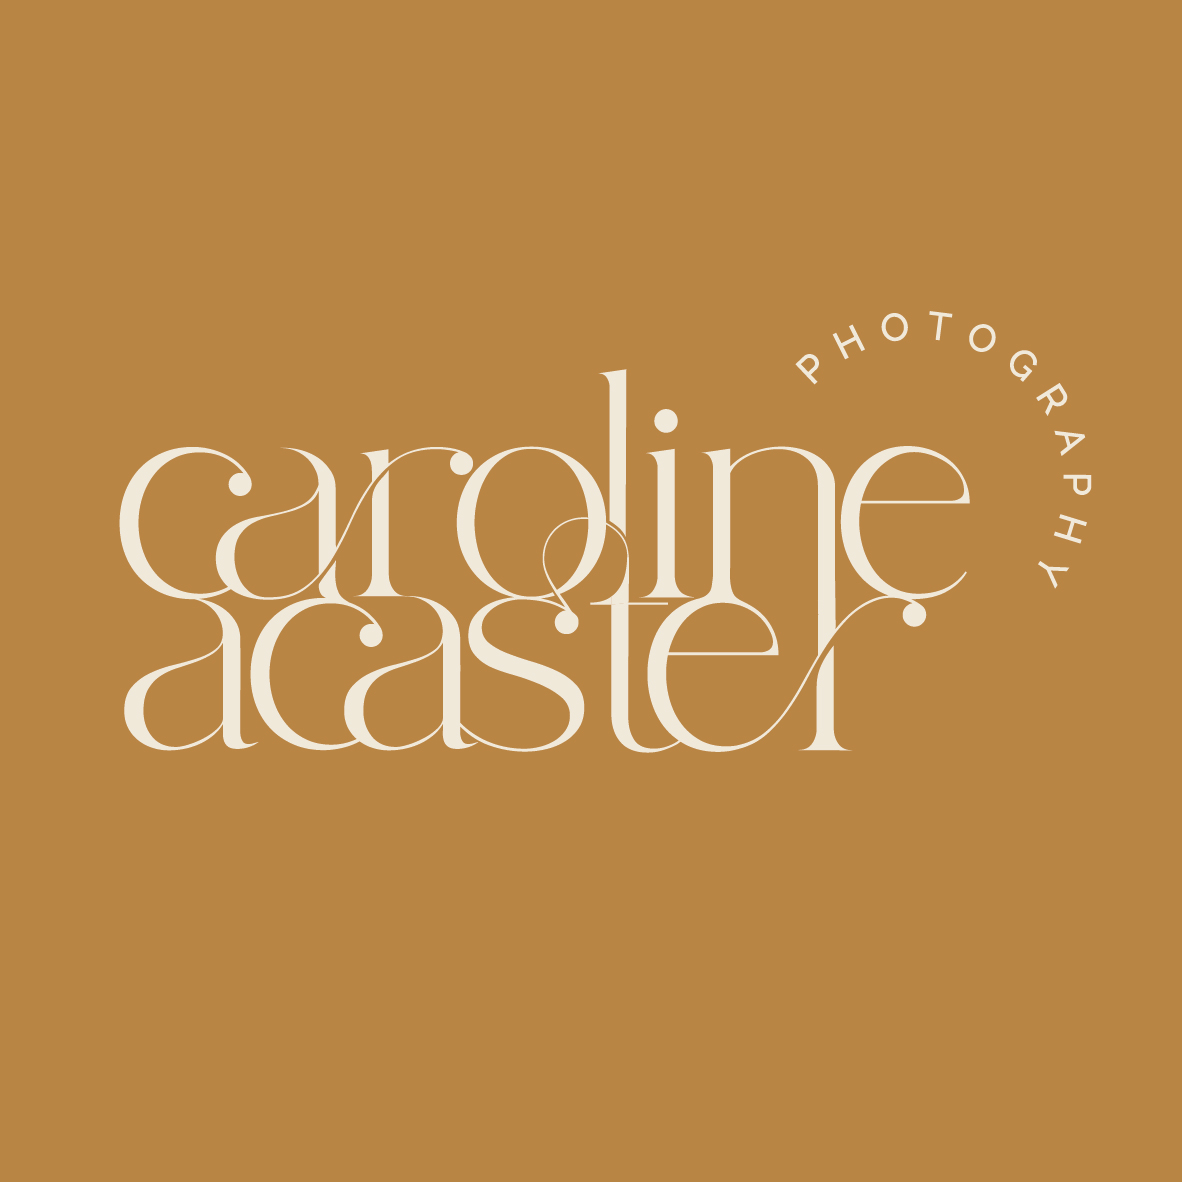 Caroline Acaster Photography 's logo